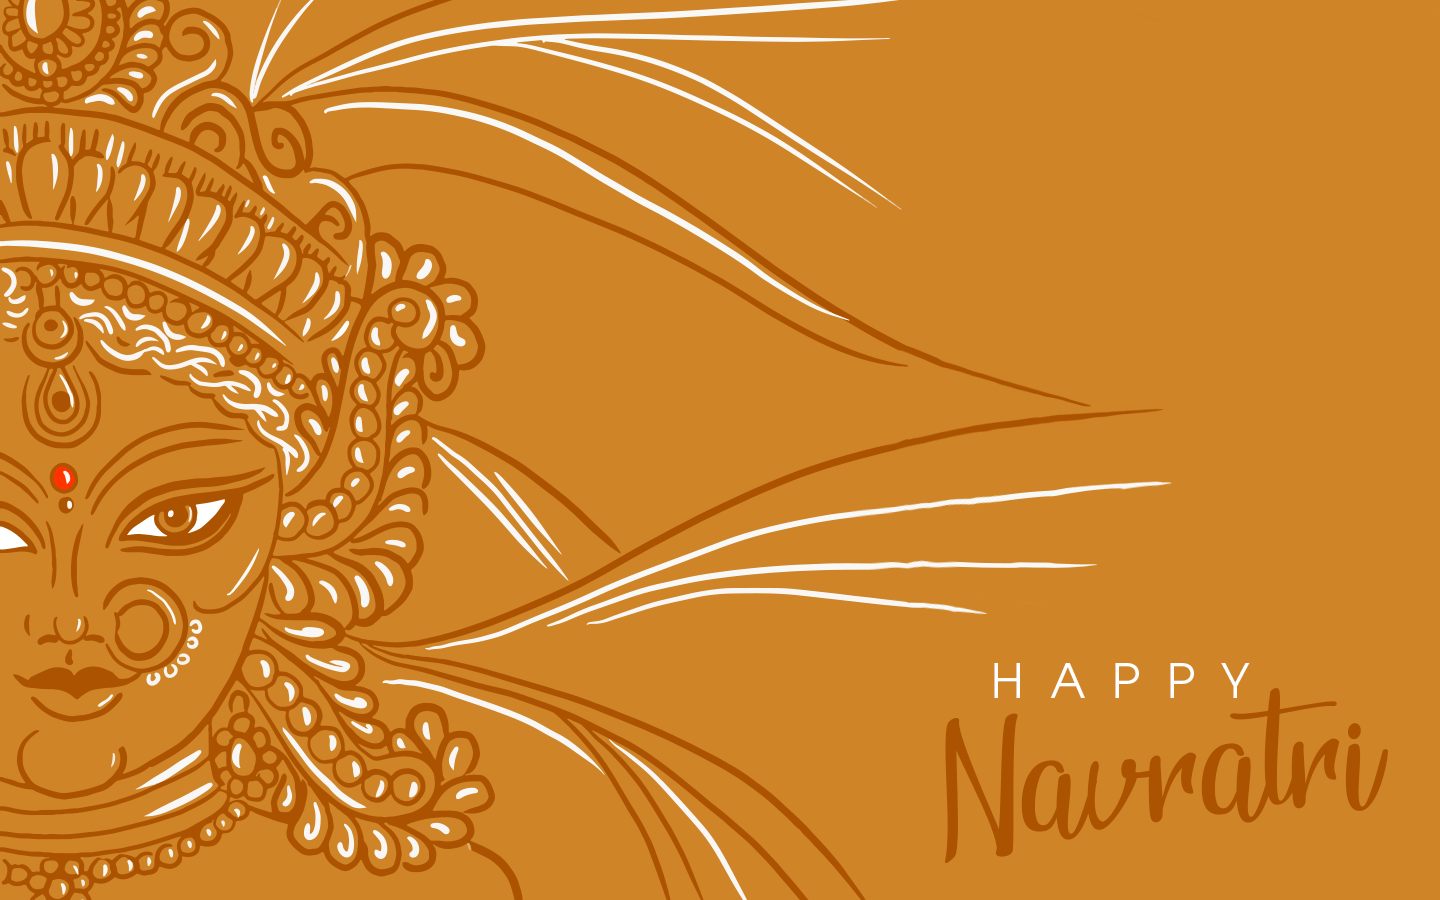 Navratri Images - Happy Navratri Wishes